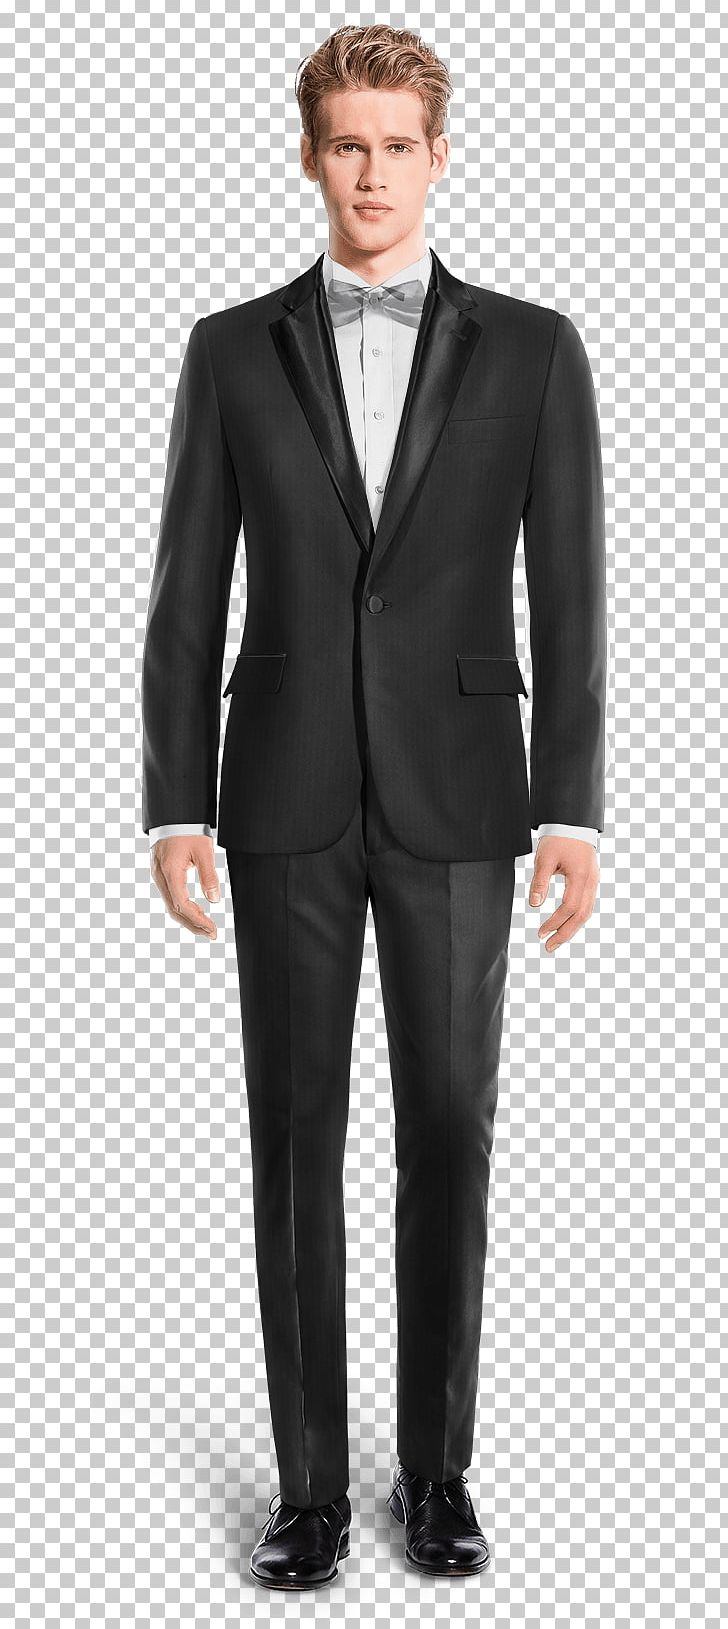 Suit JoS. A. Bank Clothiers Black Tie Shirt Tuxedo PNG, Clipart, Bespoke Tailoring, Black Tie, Blazer, Business, Businessperson Free PNG Download